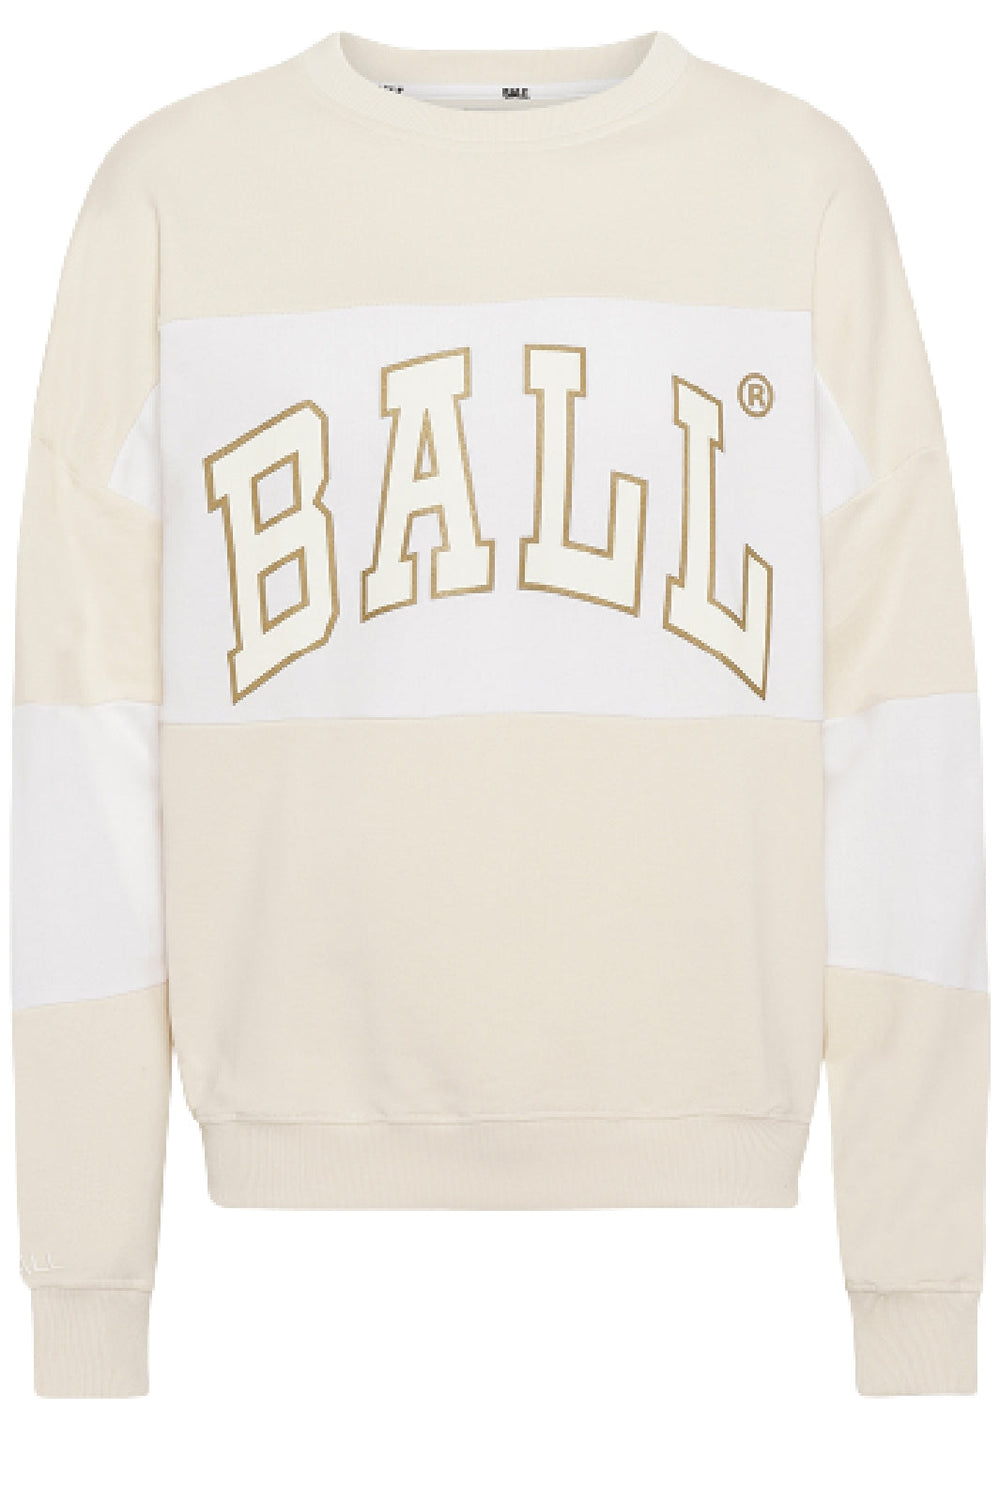 Ball - Sweatshirt J. Robinson - Of white Sweatshirt 